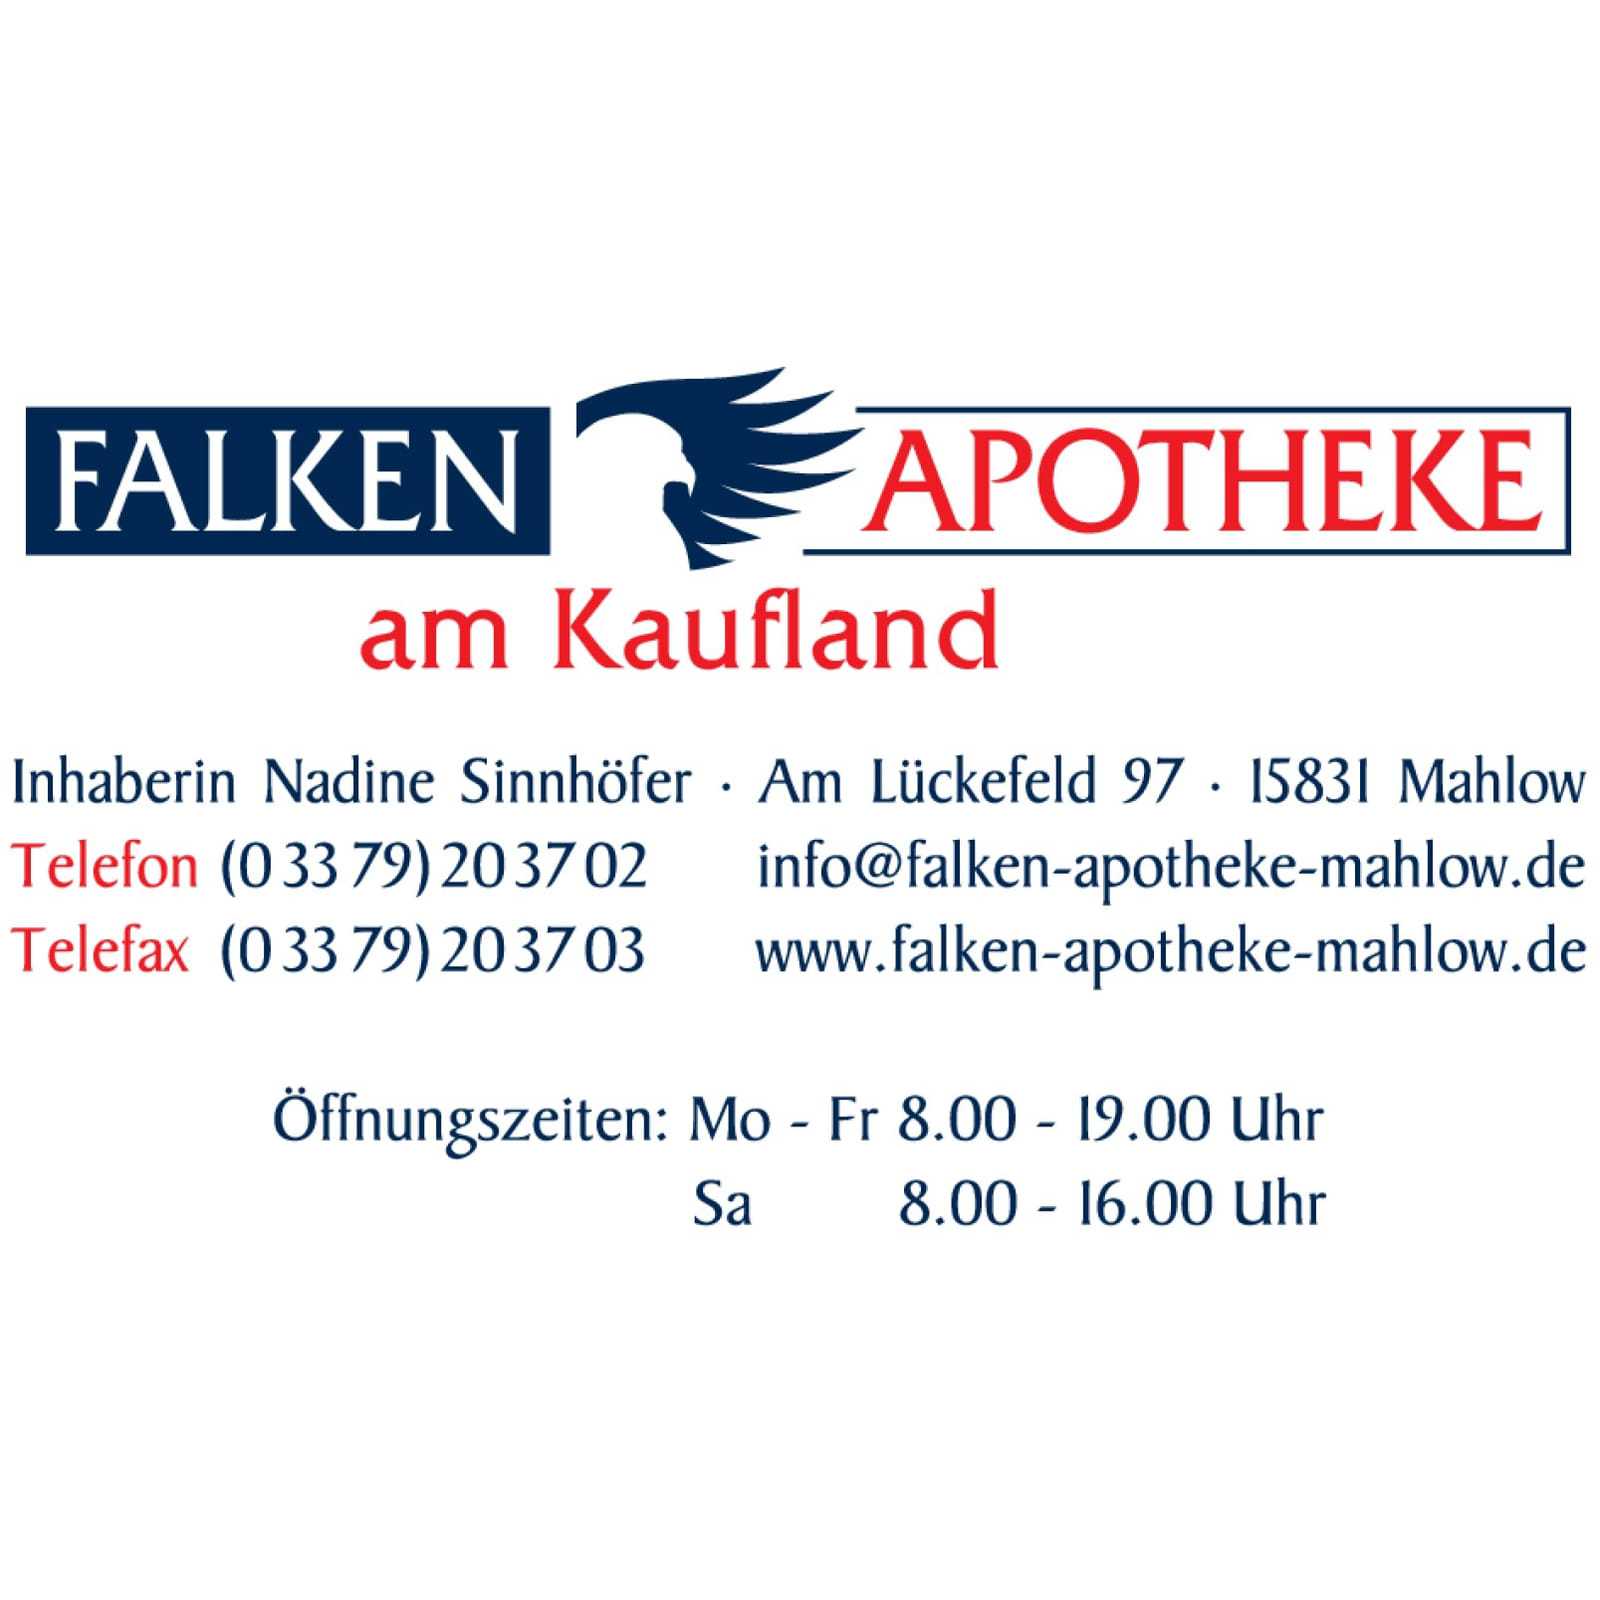 Falken Apotheke am Kaufland Logo